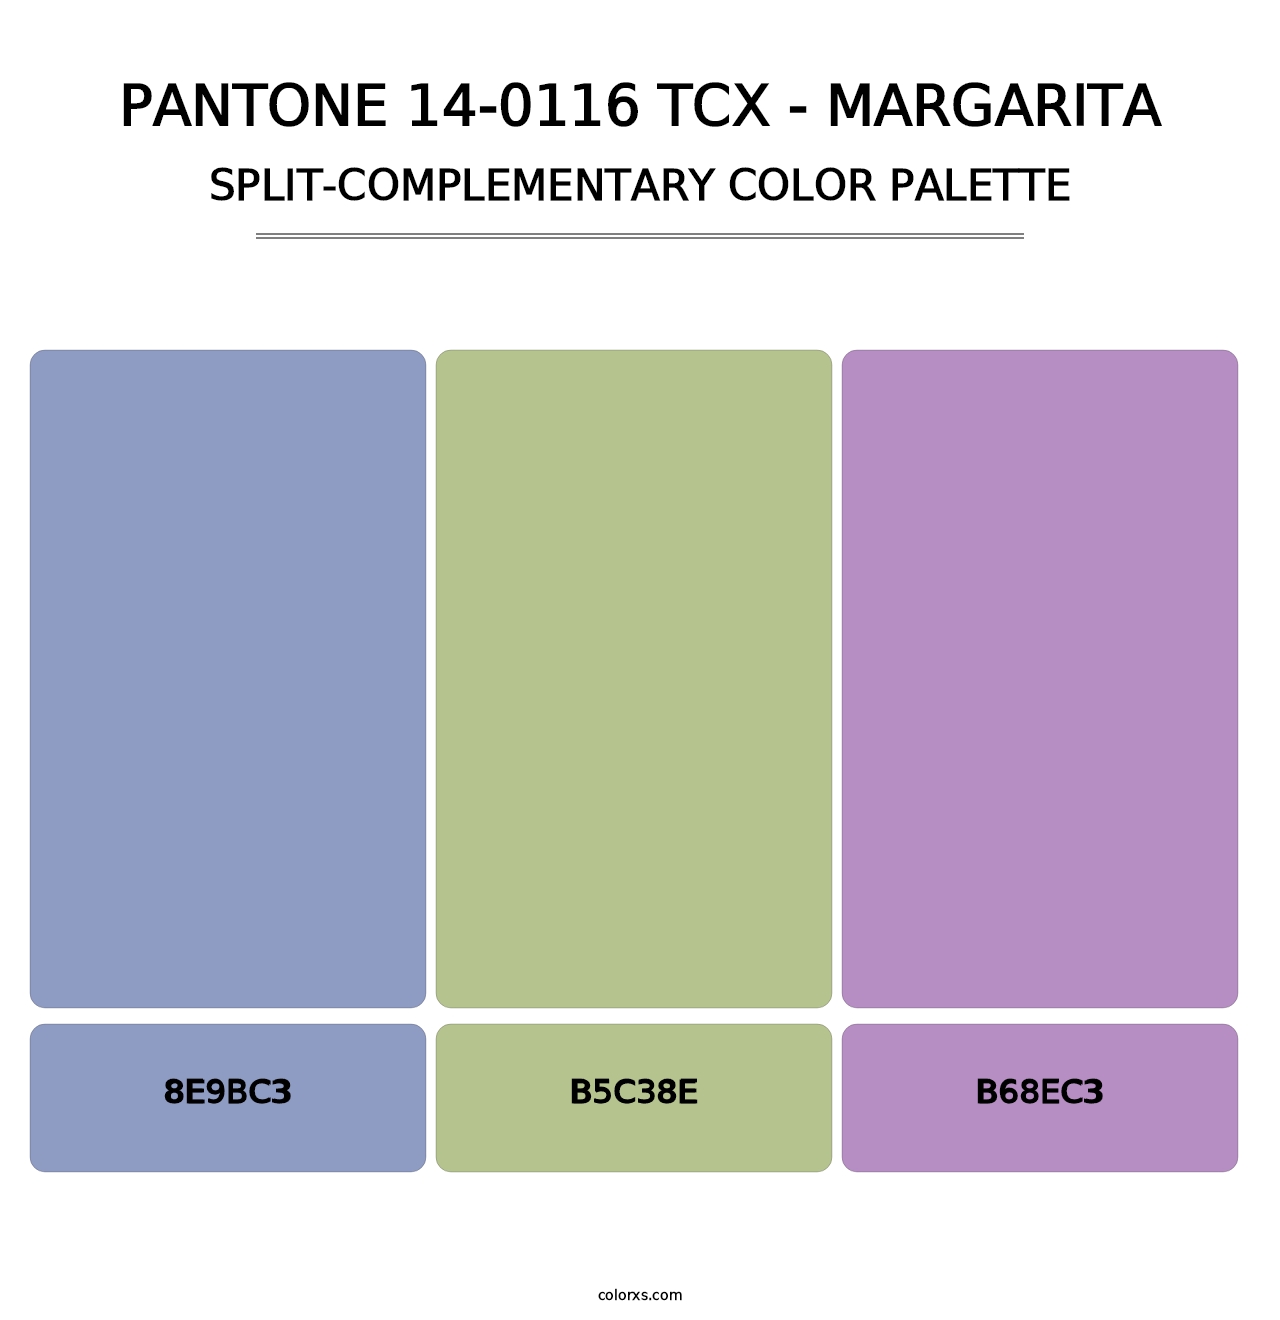 PANTONE 14-0116 TCX - Margarita - Split-Complementary Color Palette